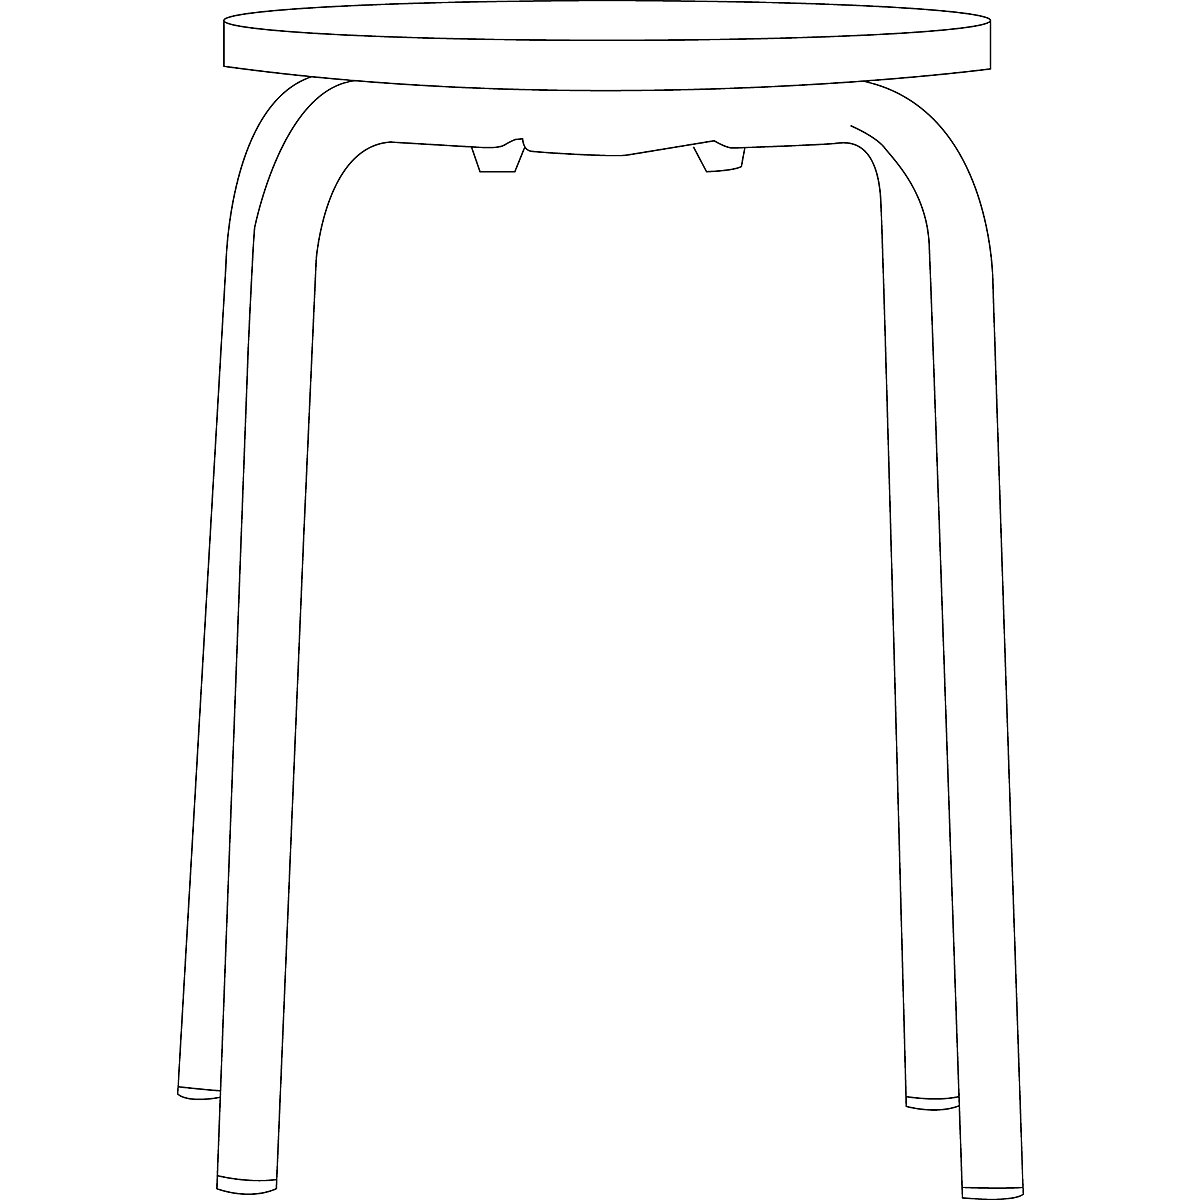 PARIS stool (Product illustration 6)-5